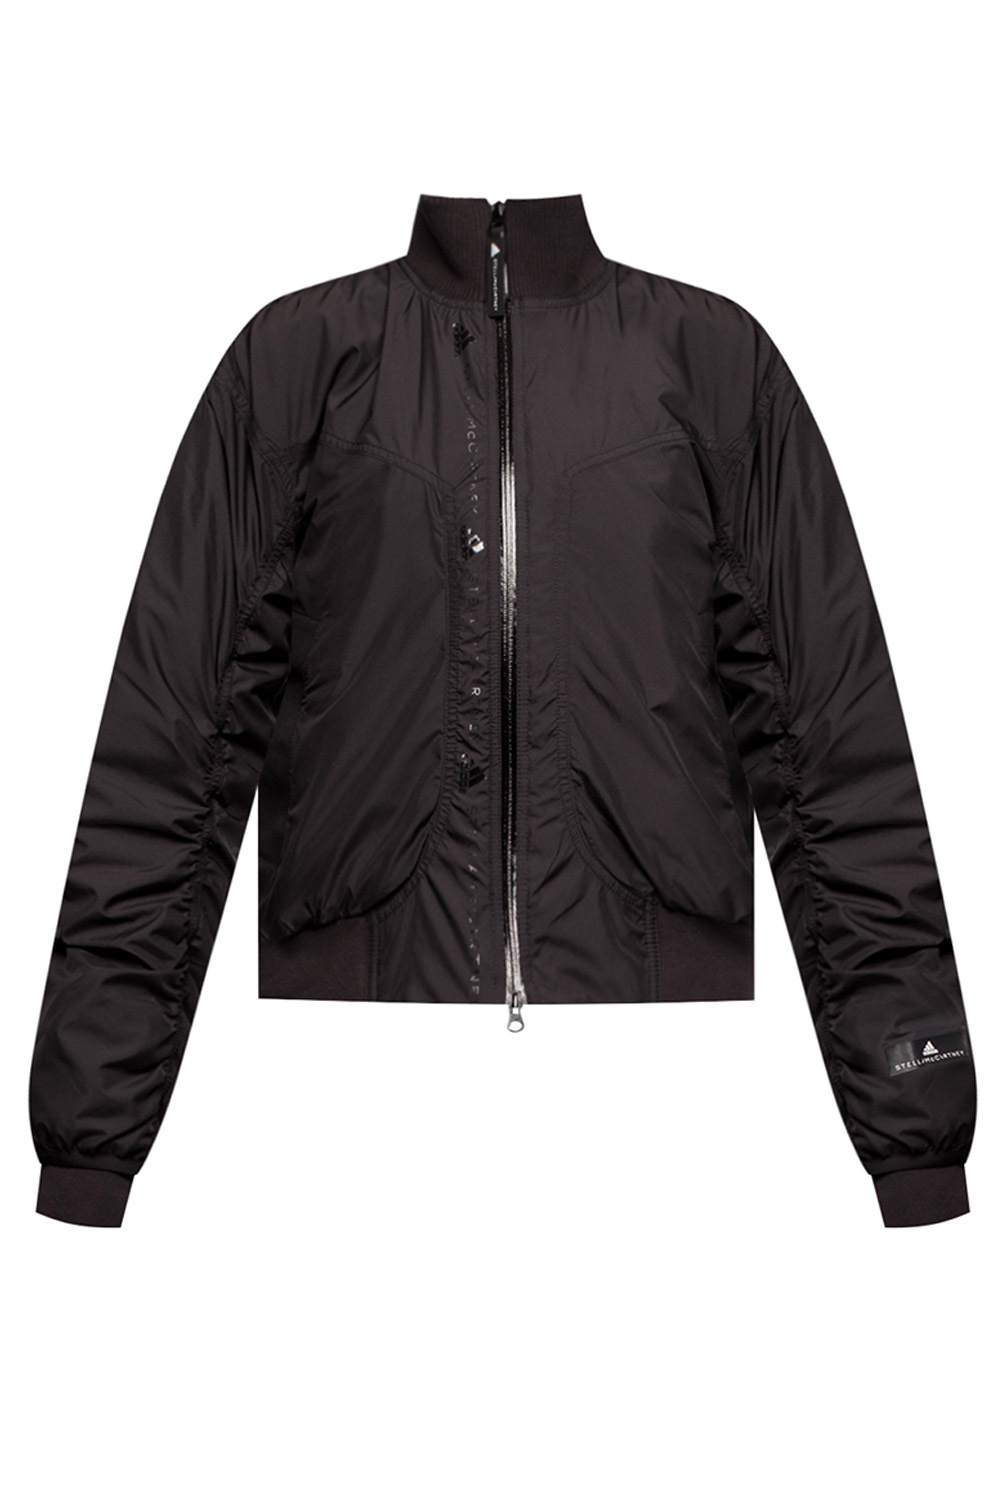 stella mccartney adidas black jacket